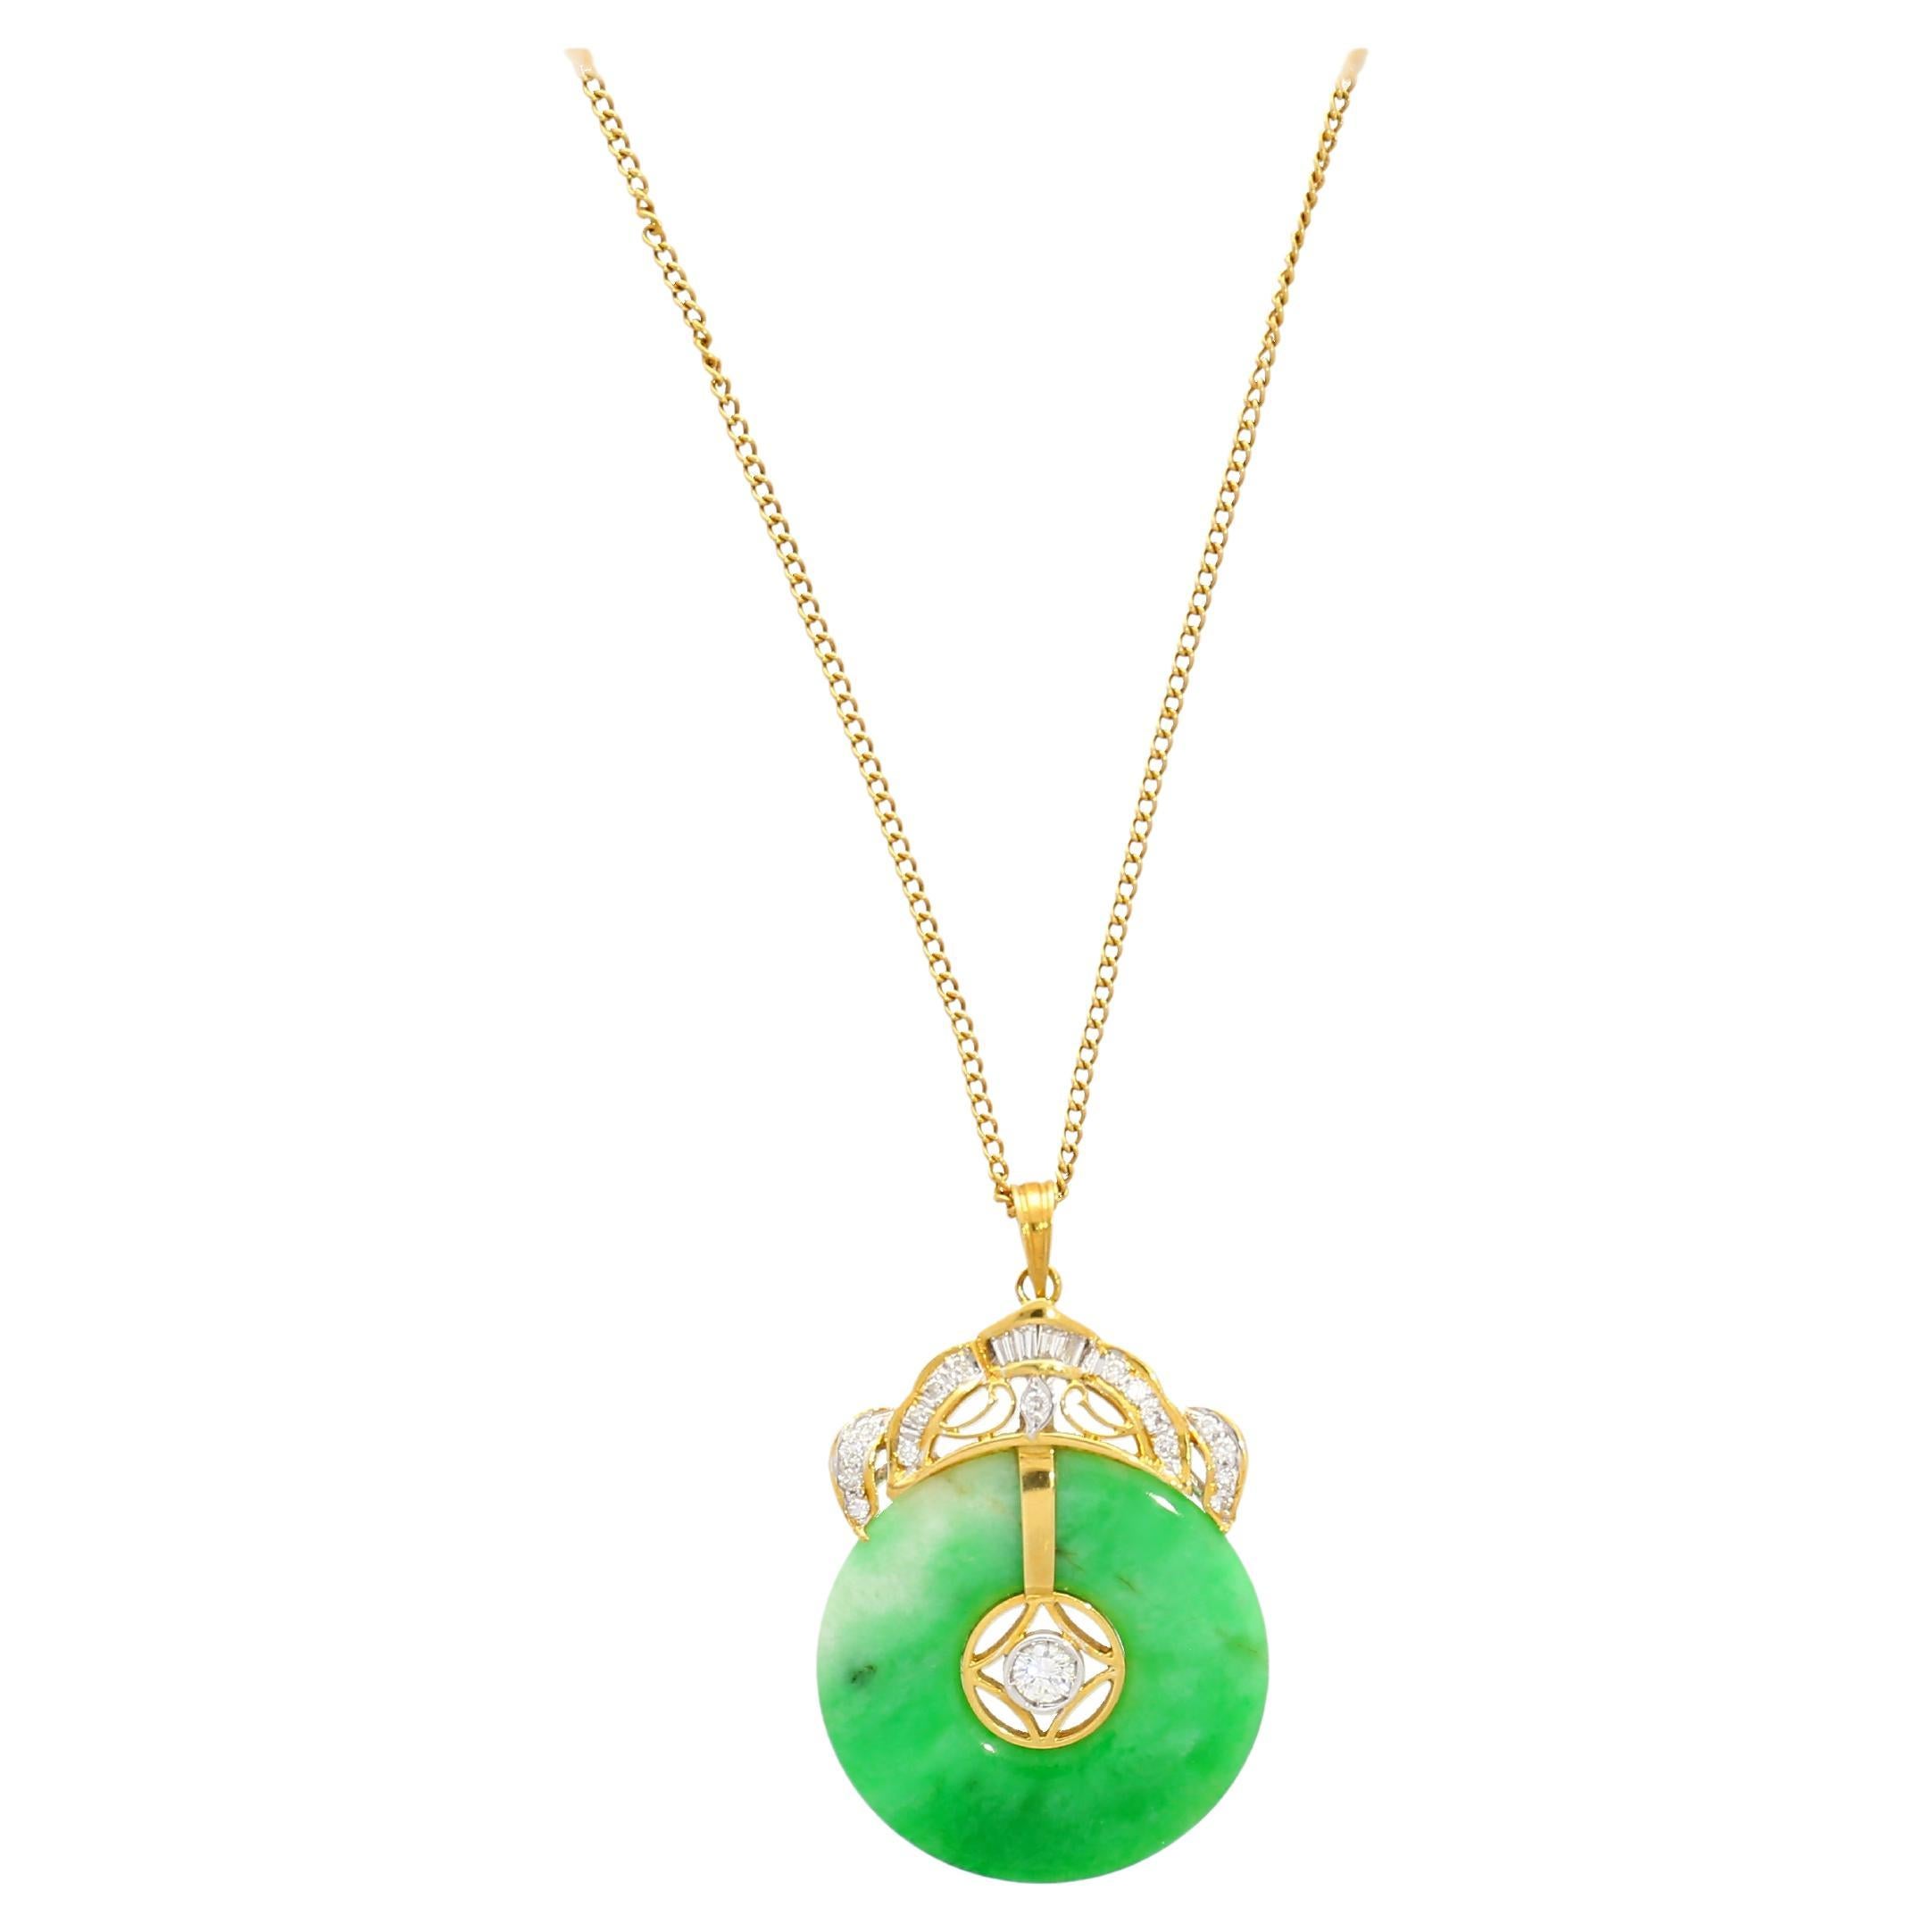 Collier pendentif en or 18 carats avec disque circulaire en jadéite, jade et diamants